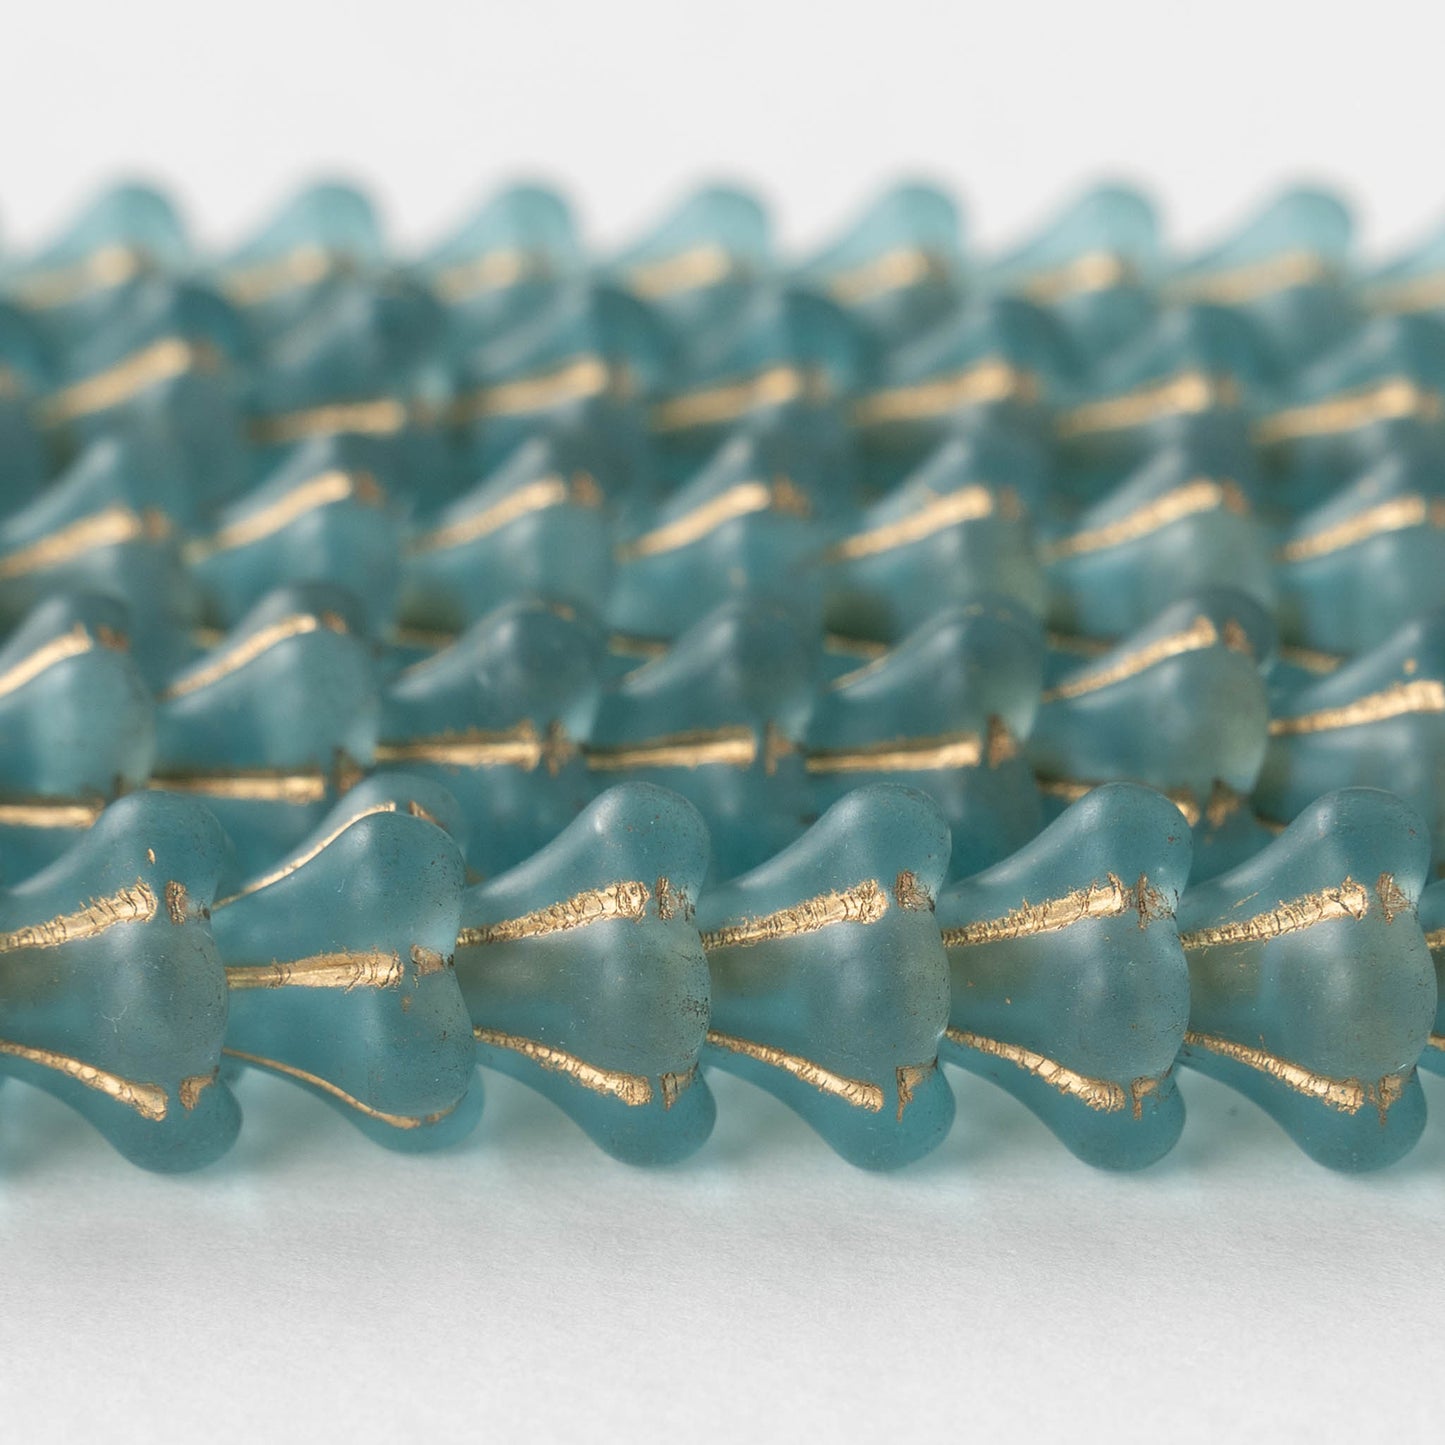 10x12mm Trumpet Flower Beads - Matte Seafoam with Gold - 10 beads